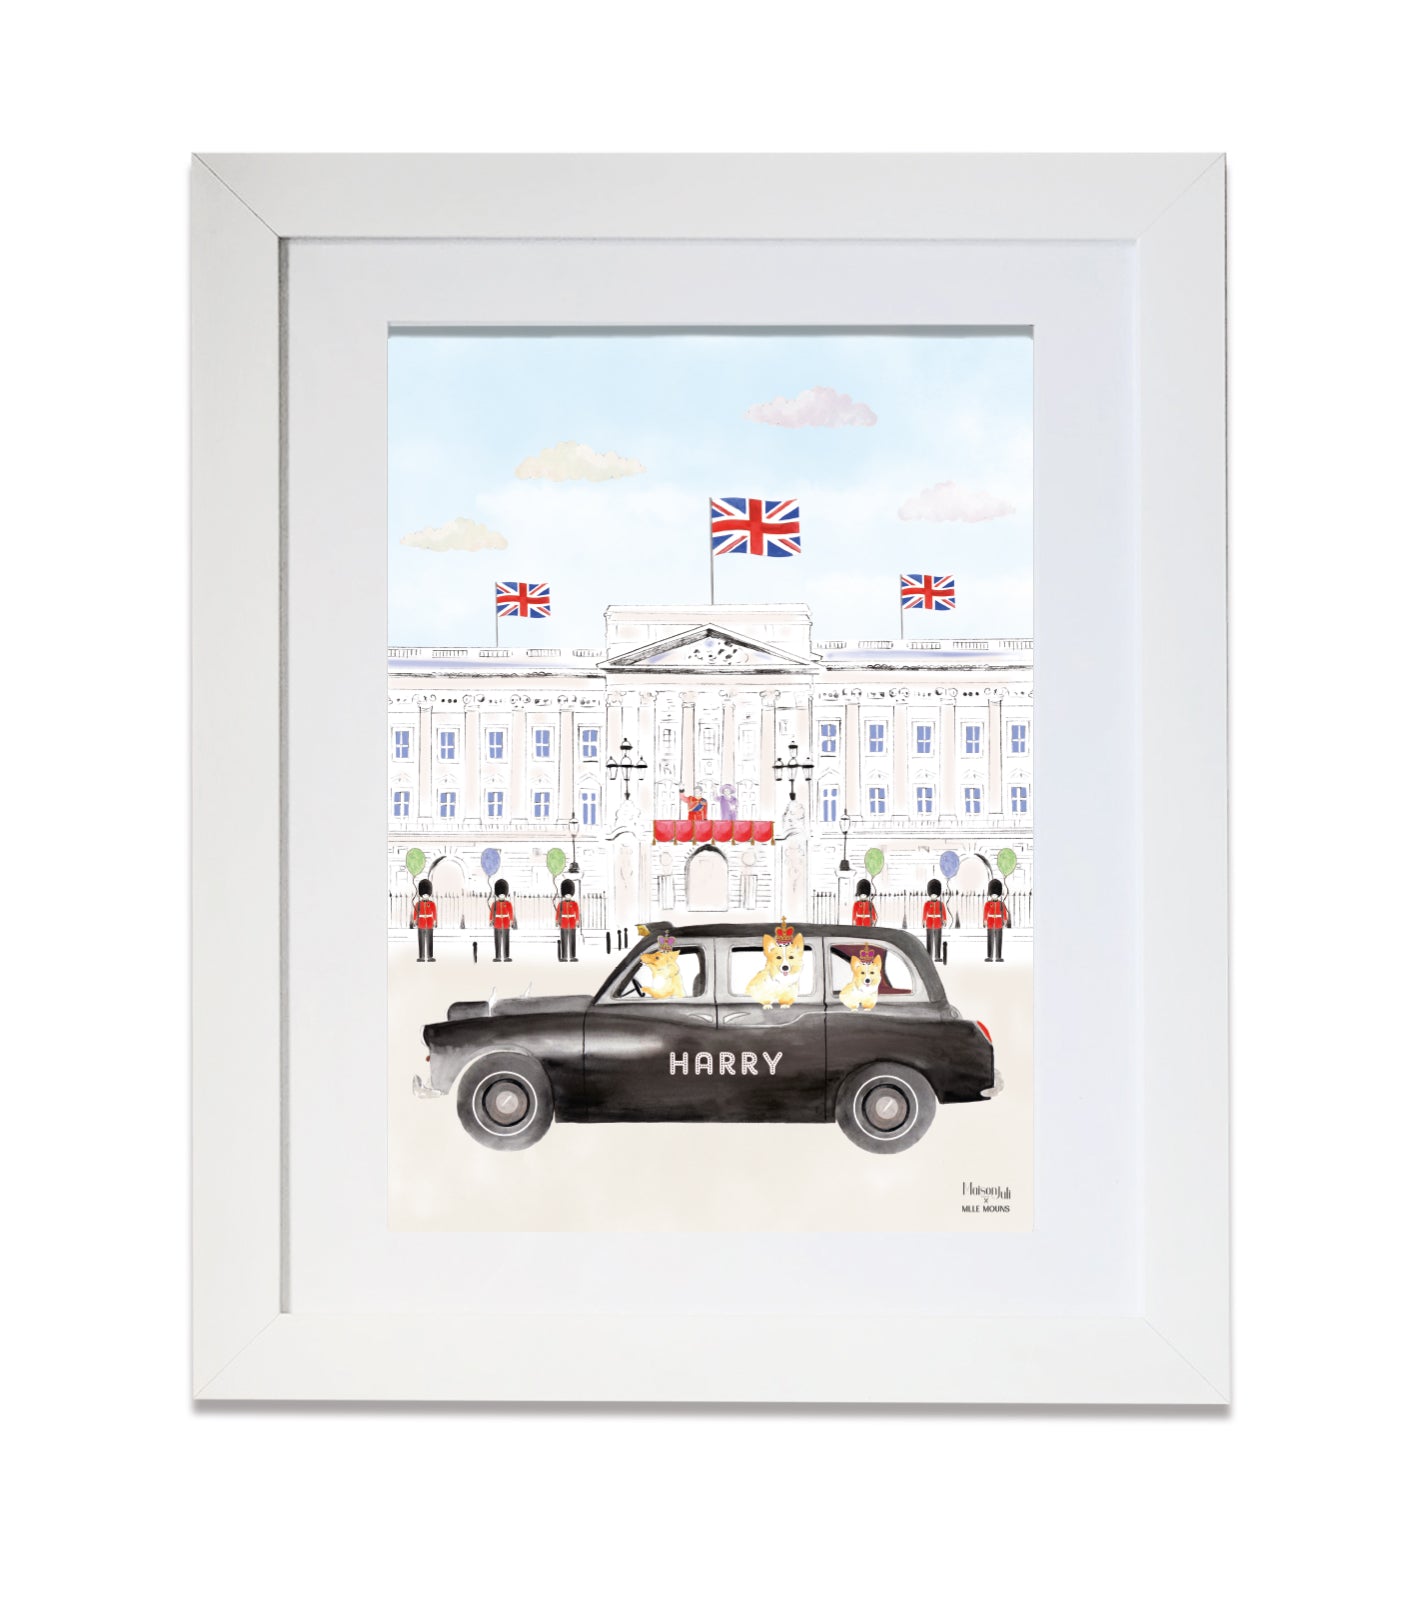 The Black Cab of Buckingham Palace for boys